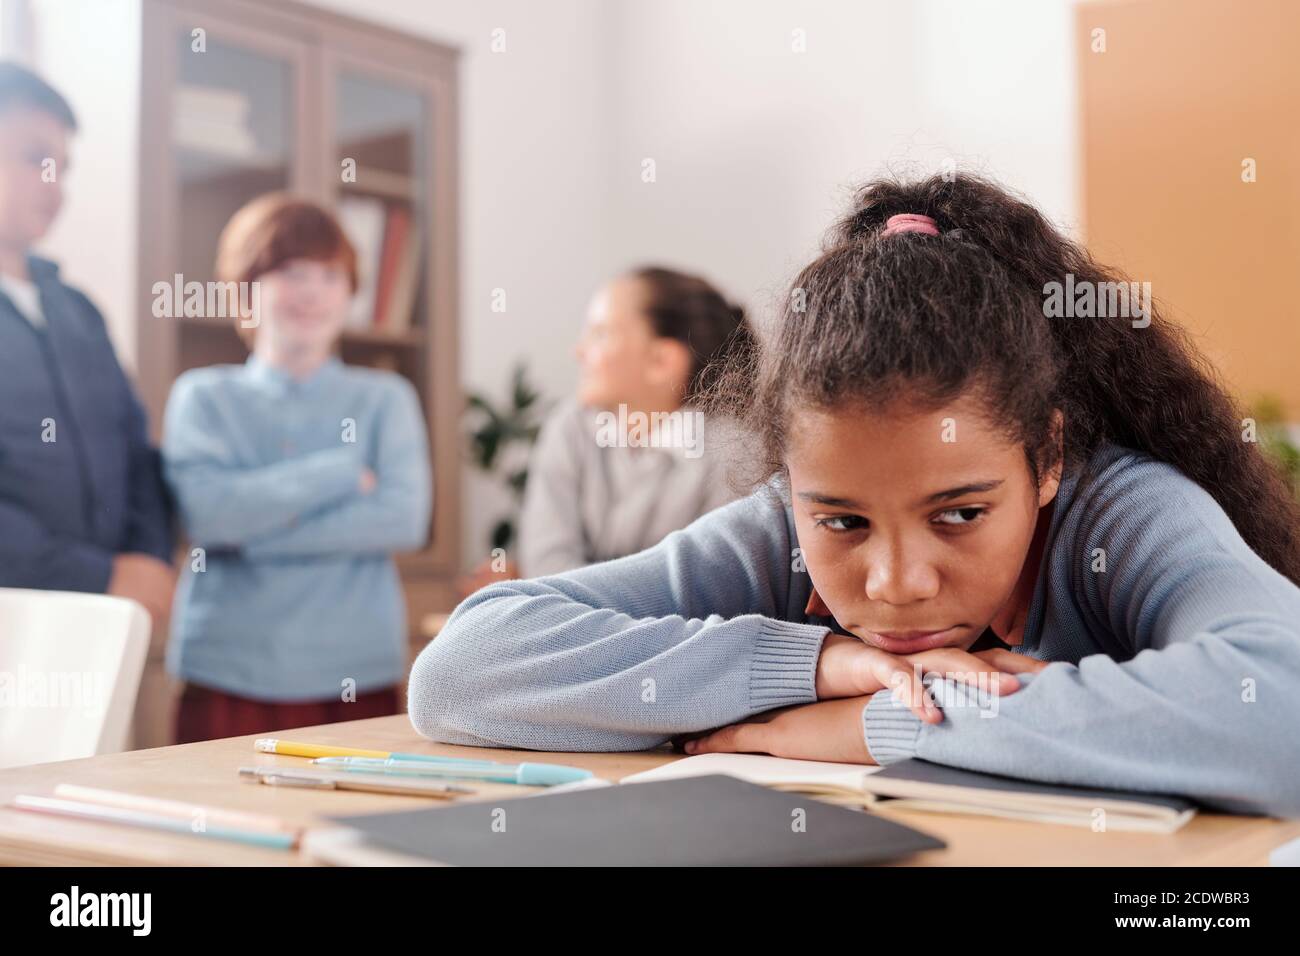 Upset or offended schoolgirl sitting by desk against classmates talking Stock Photo